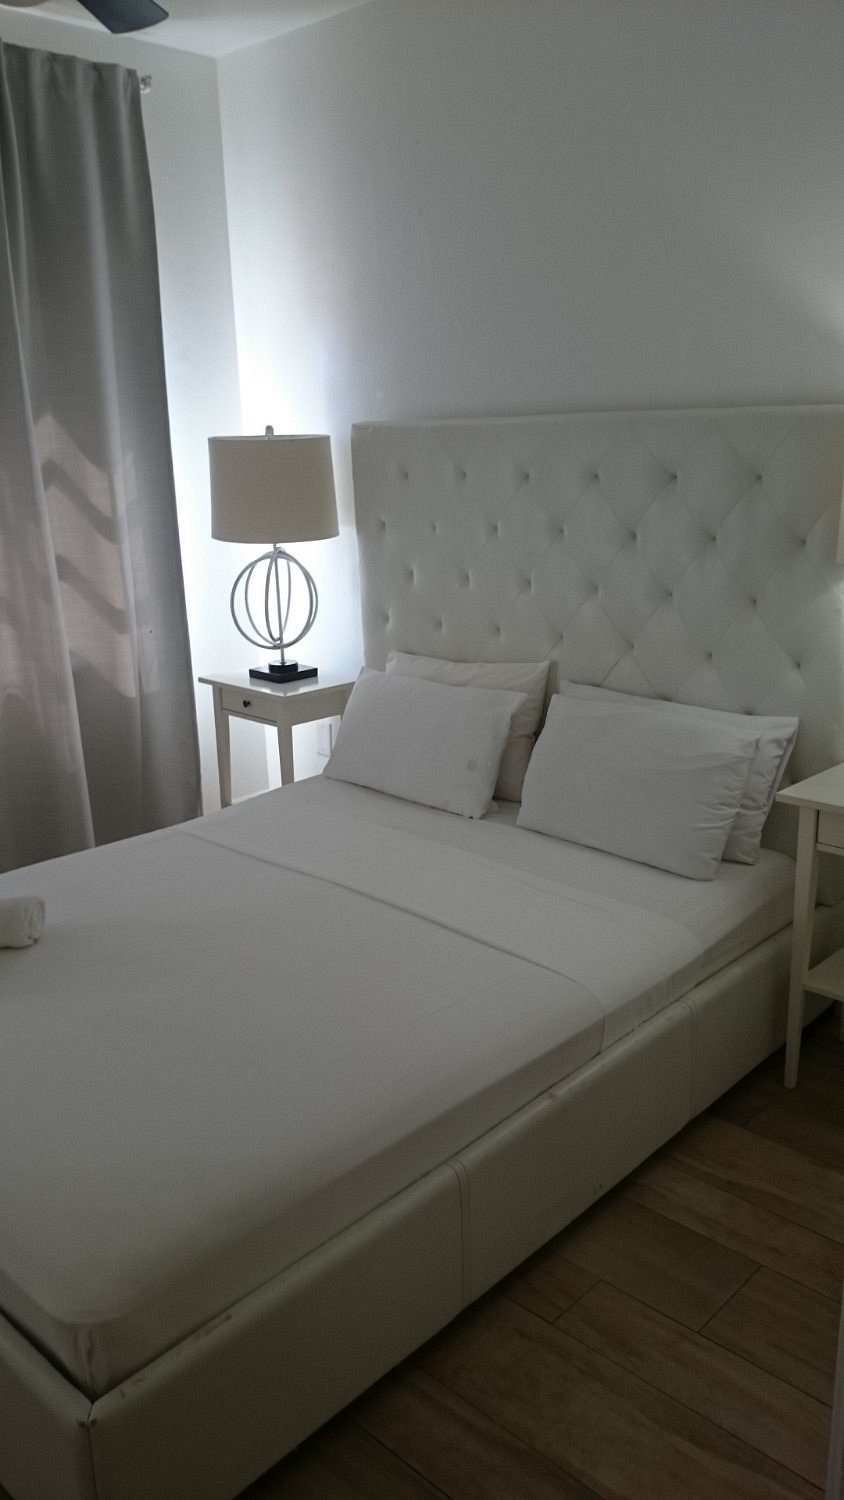 Sunrise Court Apartments Rooms Pictures Reviews Tripadvisor